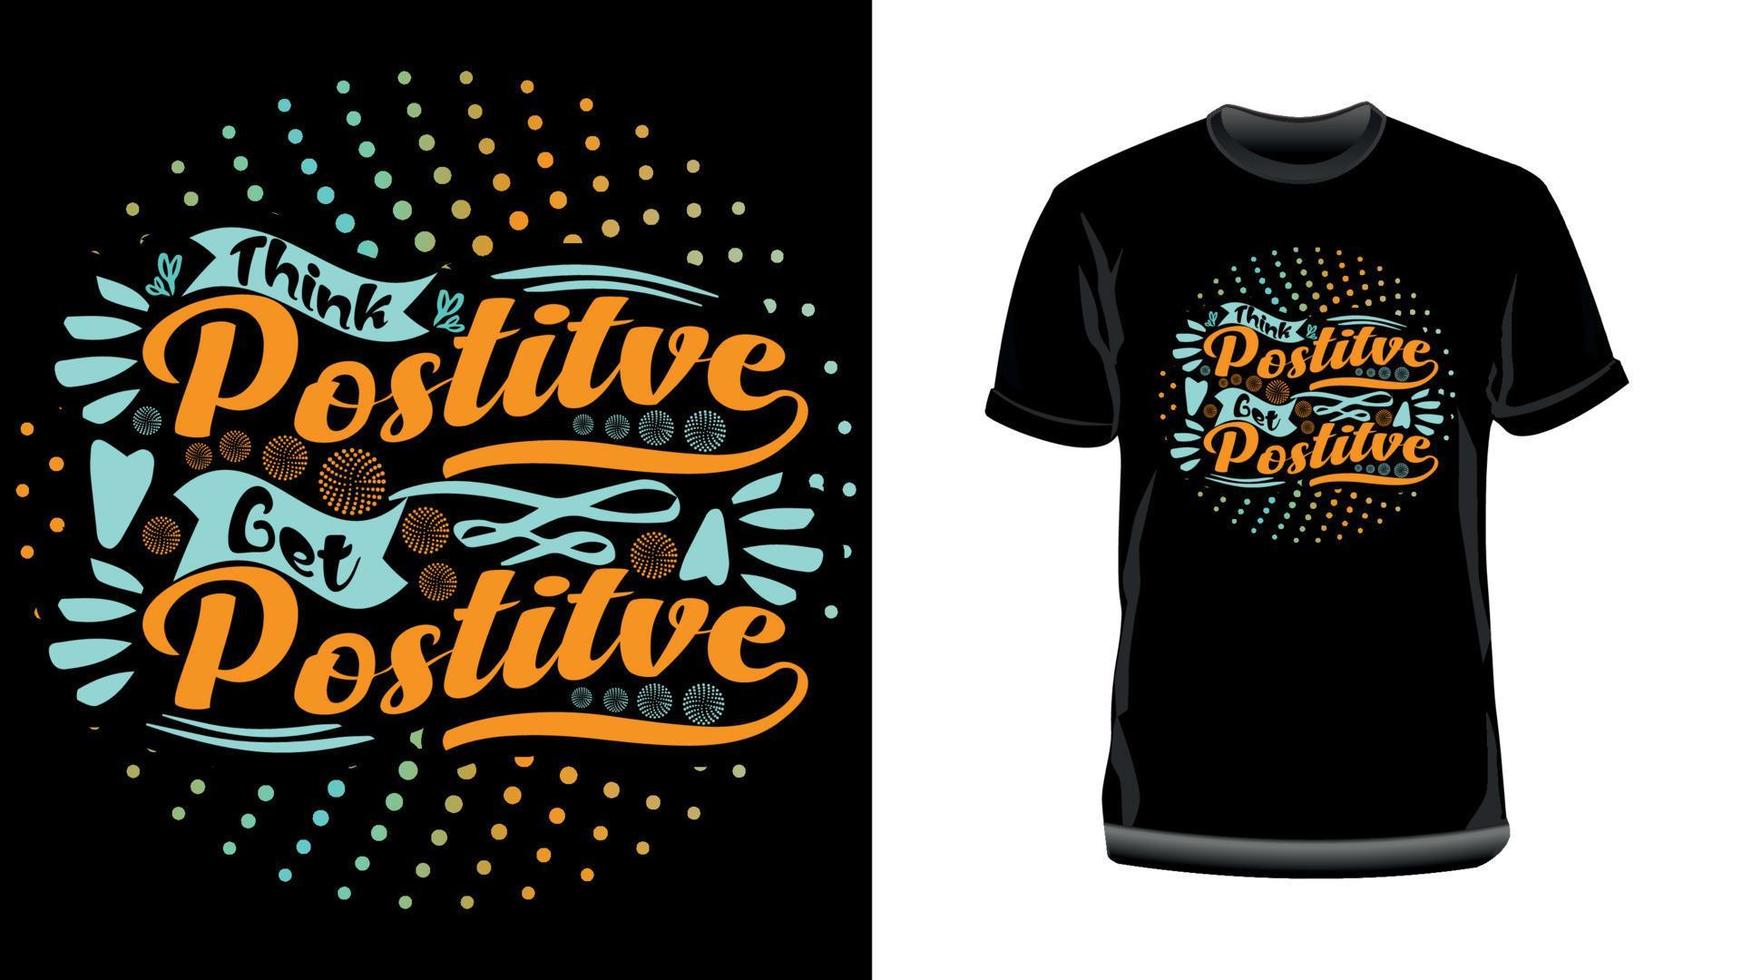 Think Positive Get Positive- Motivational Typography T-Shirt Design vector